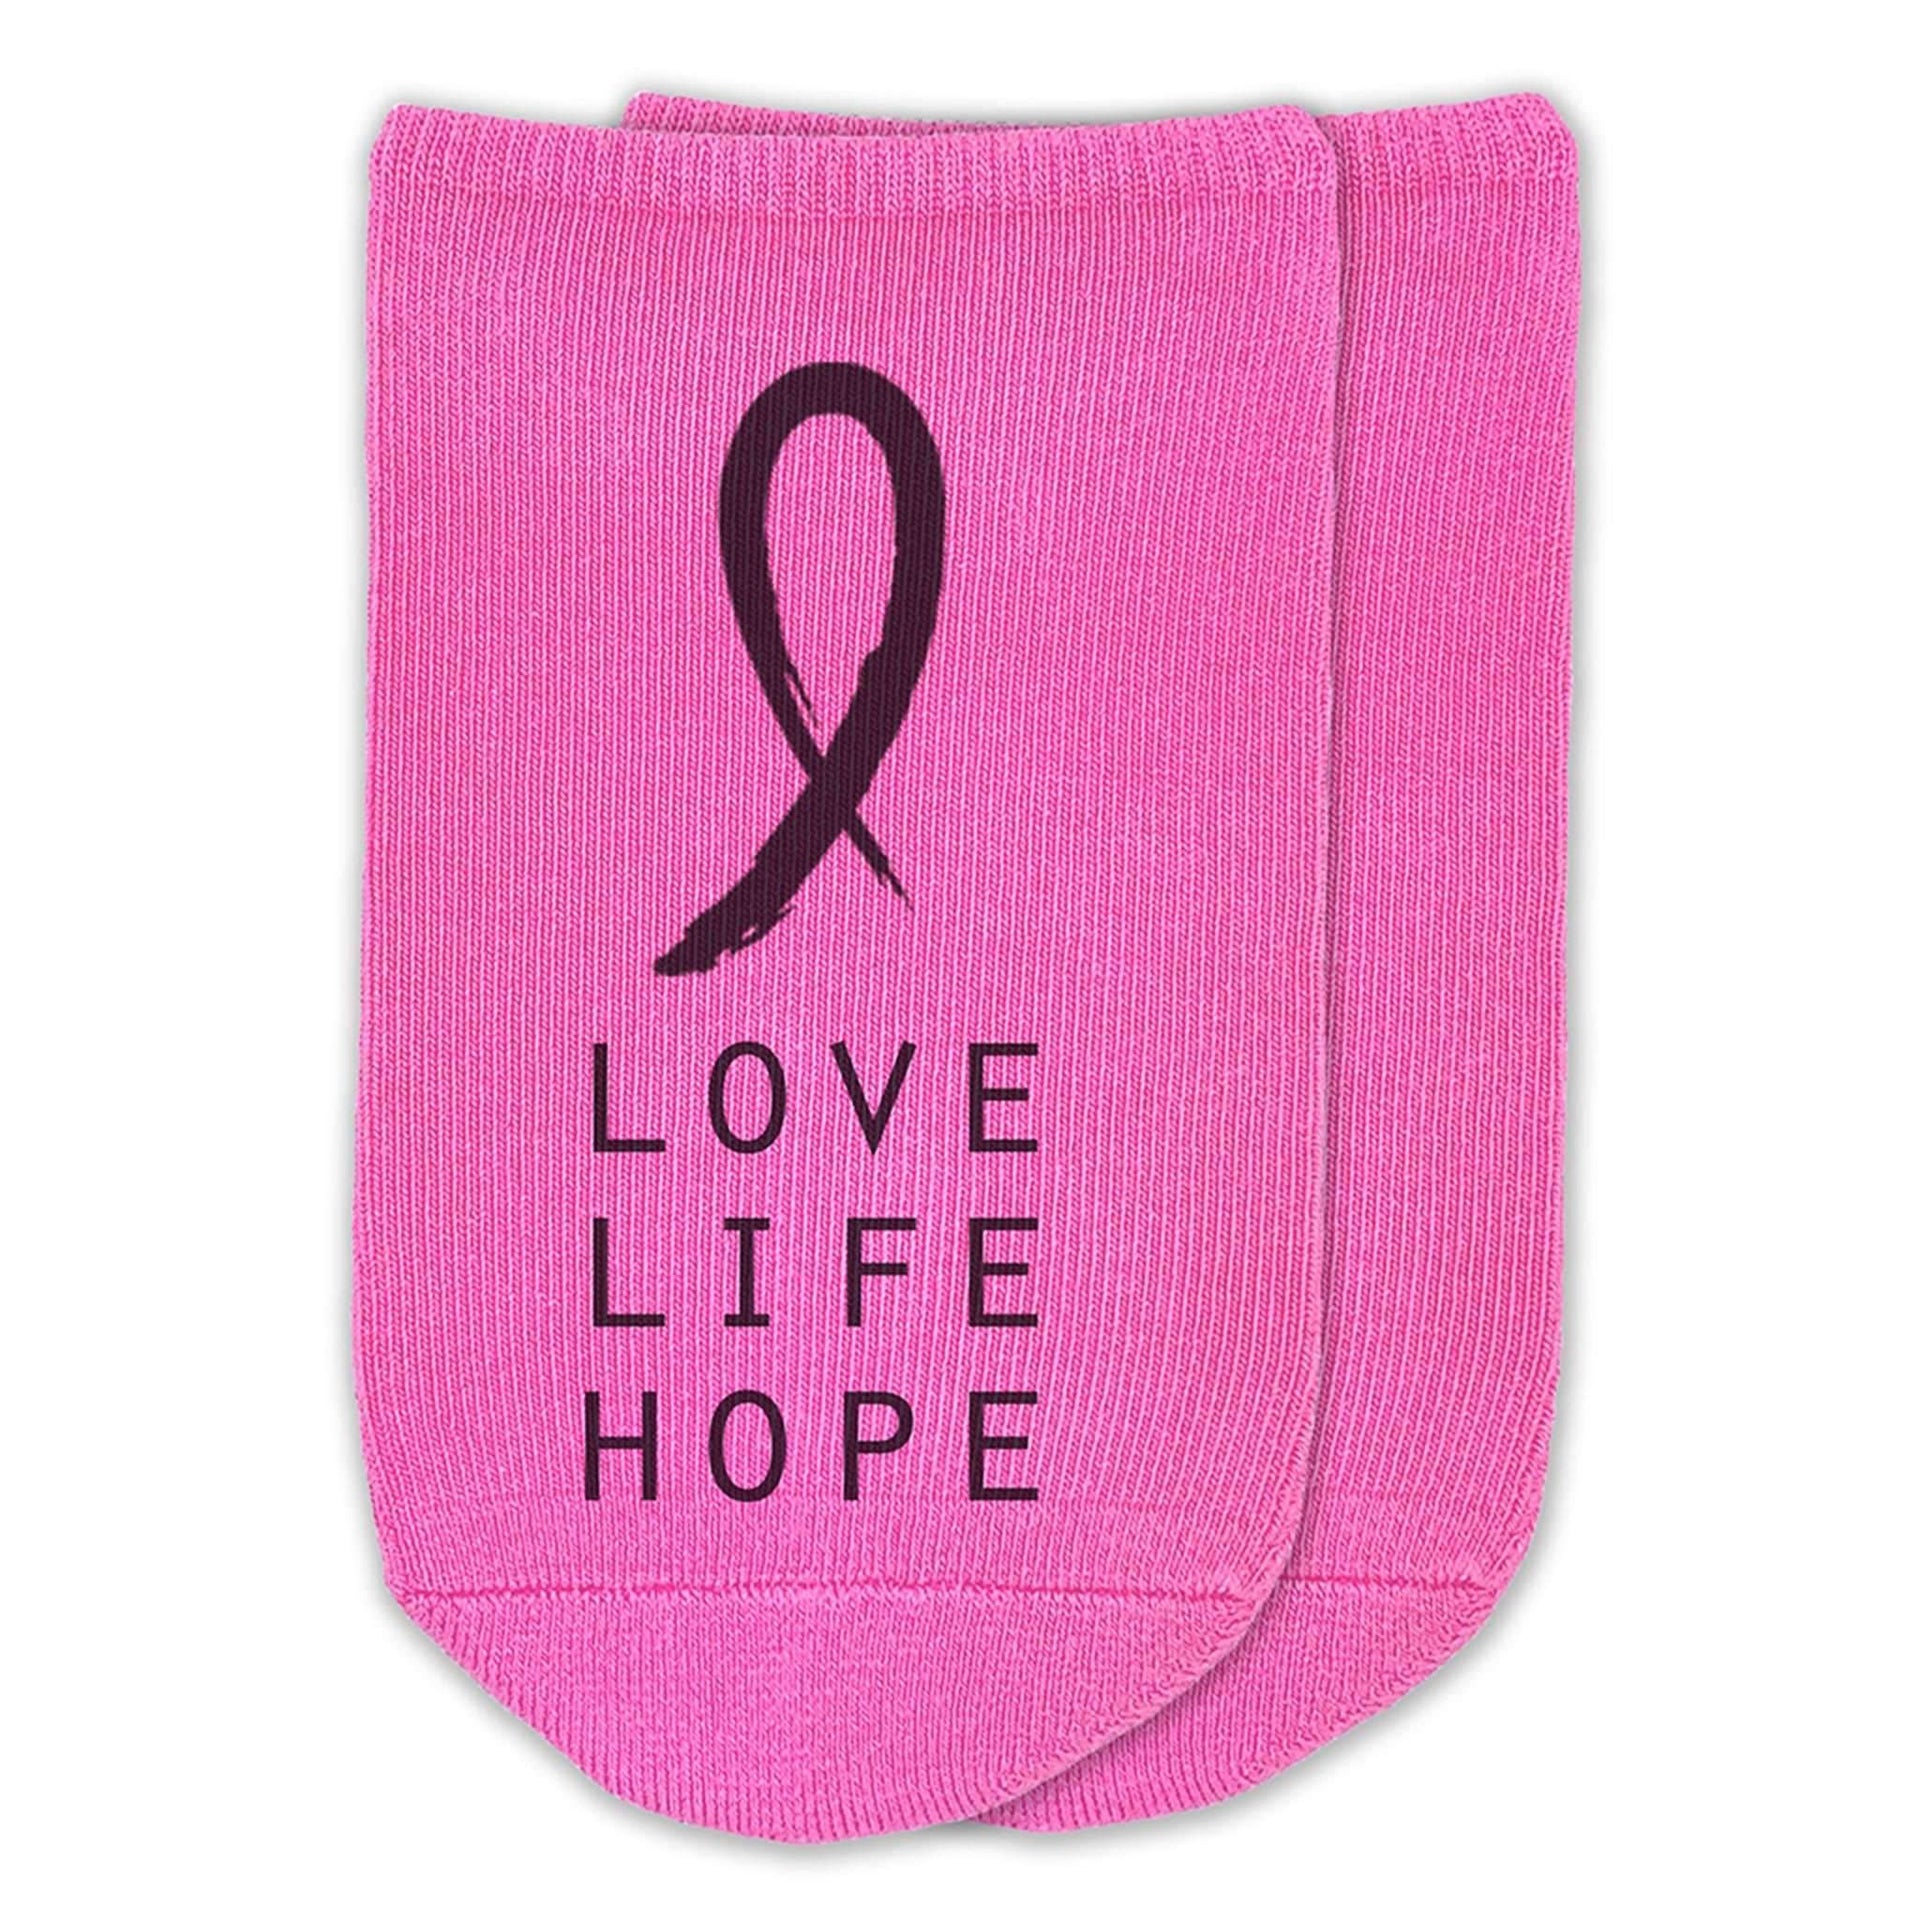 Love life hope fuchsia breast cancer awareness digitally printed on no show socks.